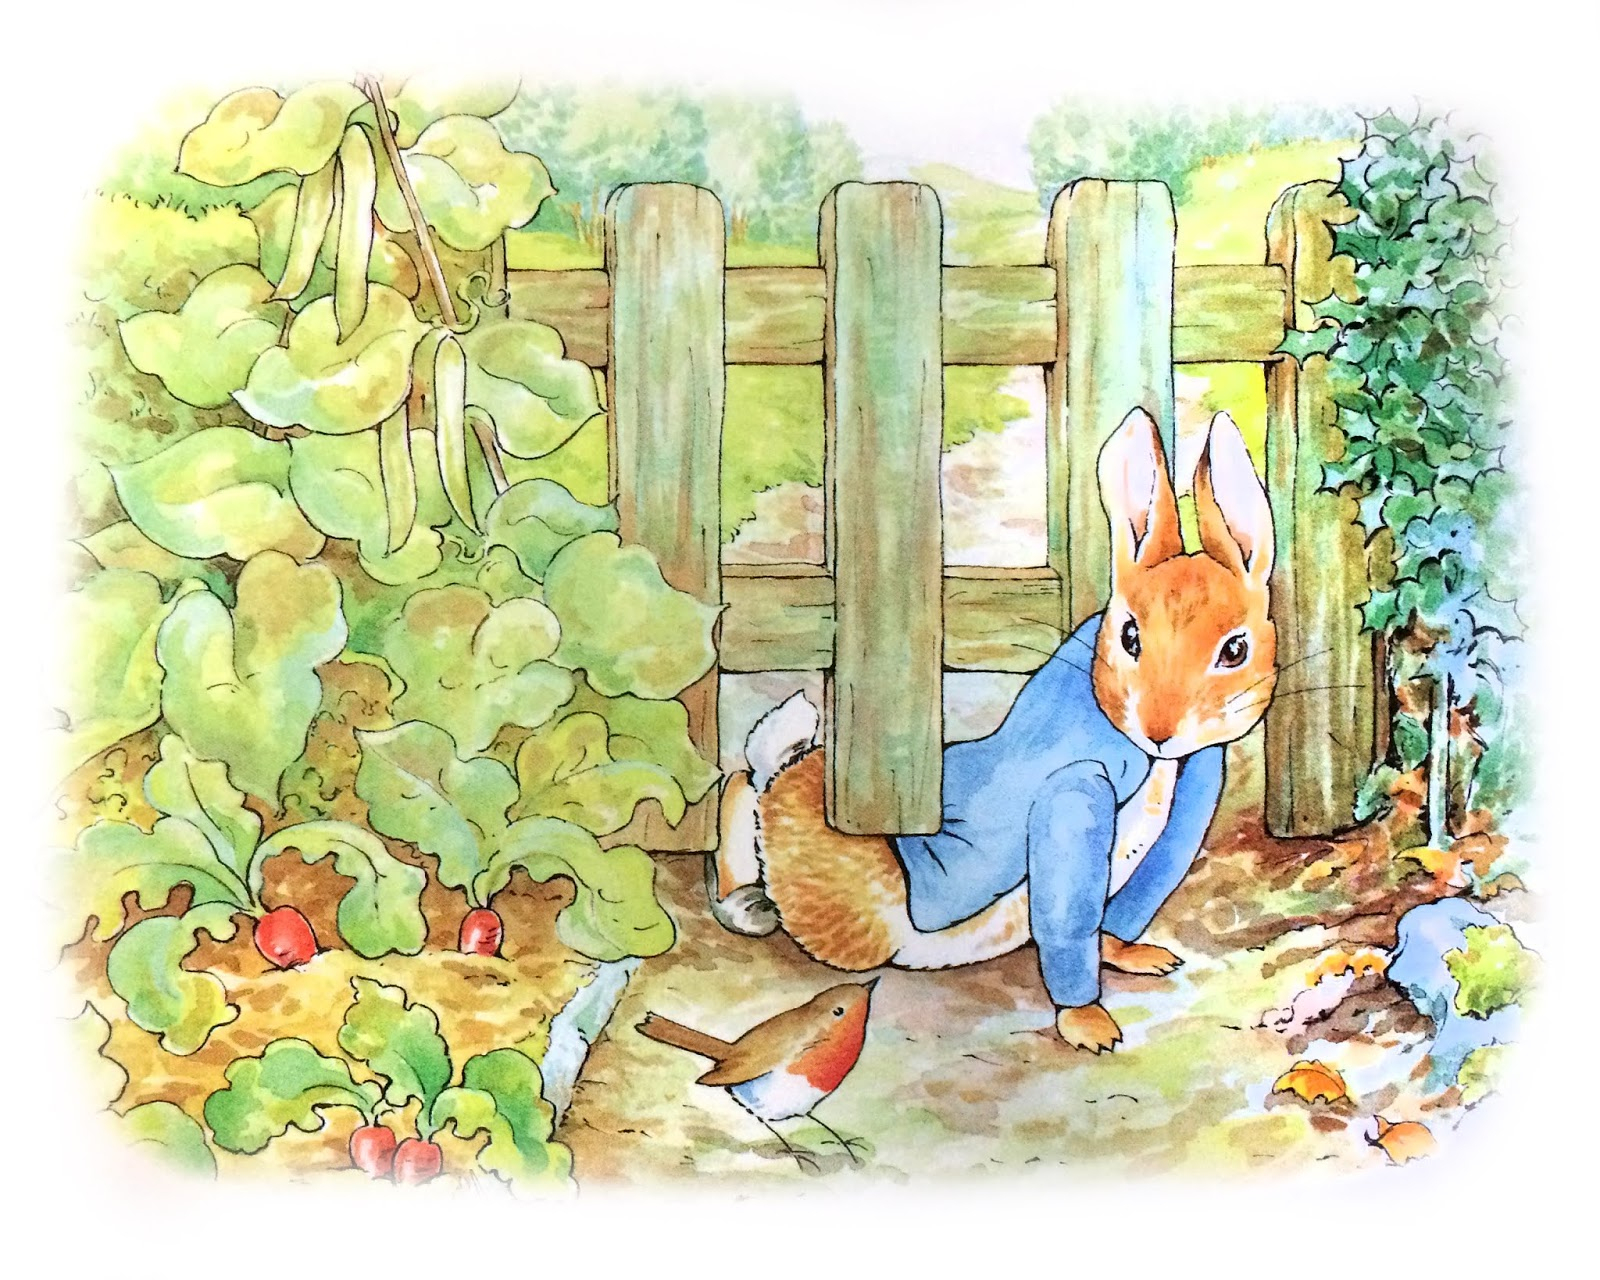 My Porch Prints: Freebie Friday - Peter Rabbit Images - Free Printable Peter Rabbit Images